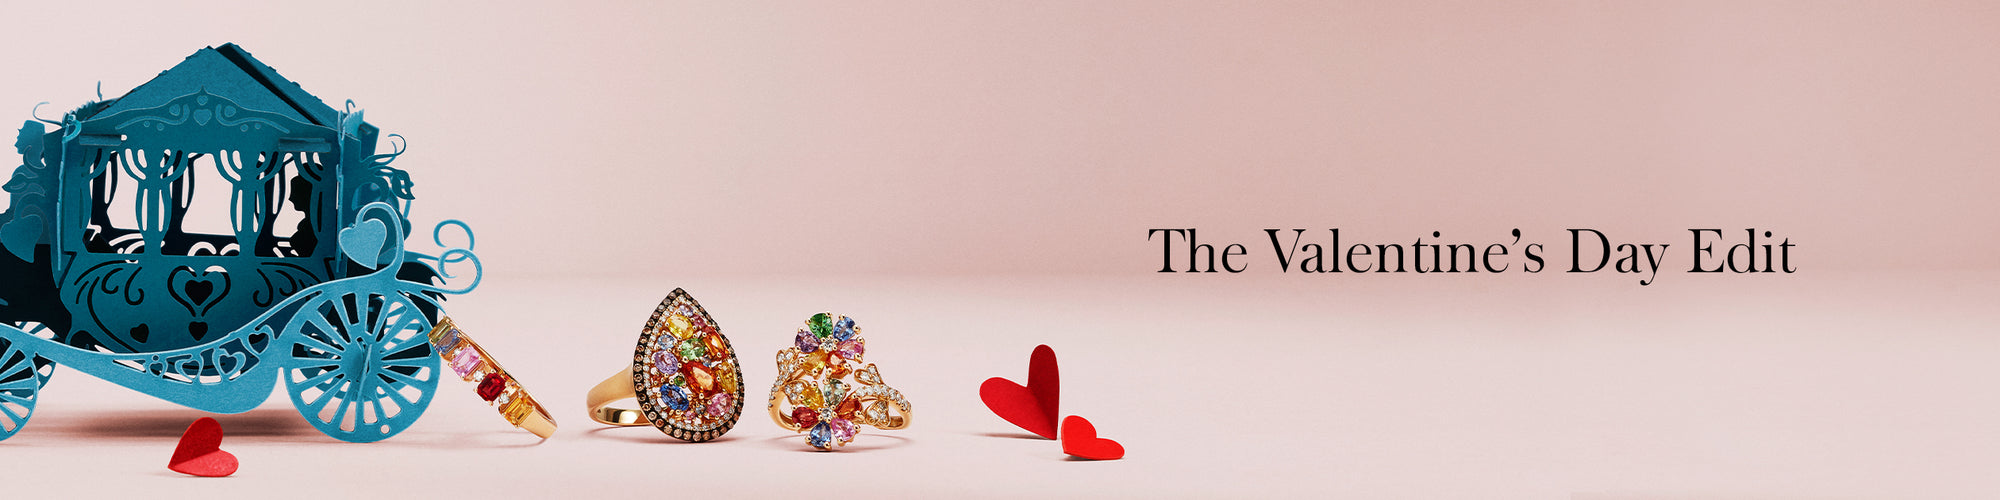 Effy Jewelry Valentine's Day Edit